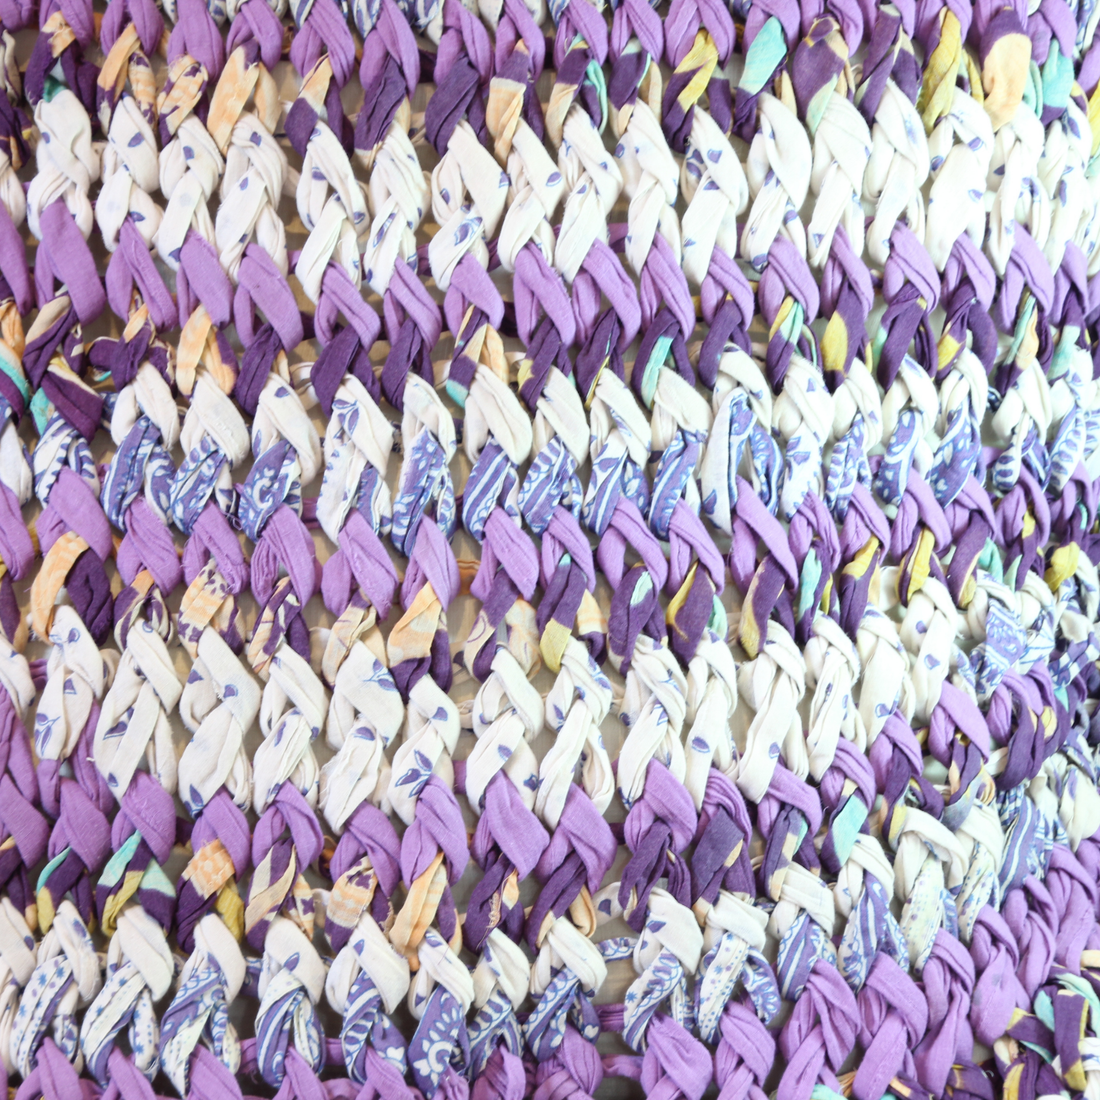 Cushions fair trade ethical sustainable fashion Chunky Knit Cushion Covers - Purple conscious purchase Basha